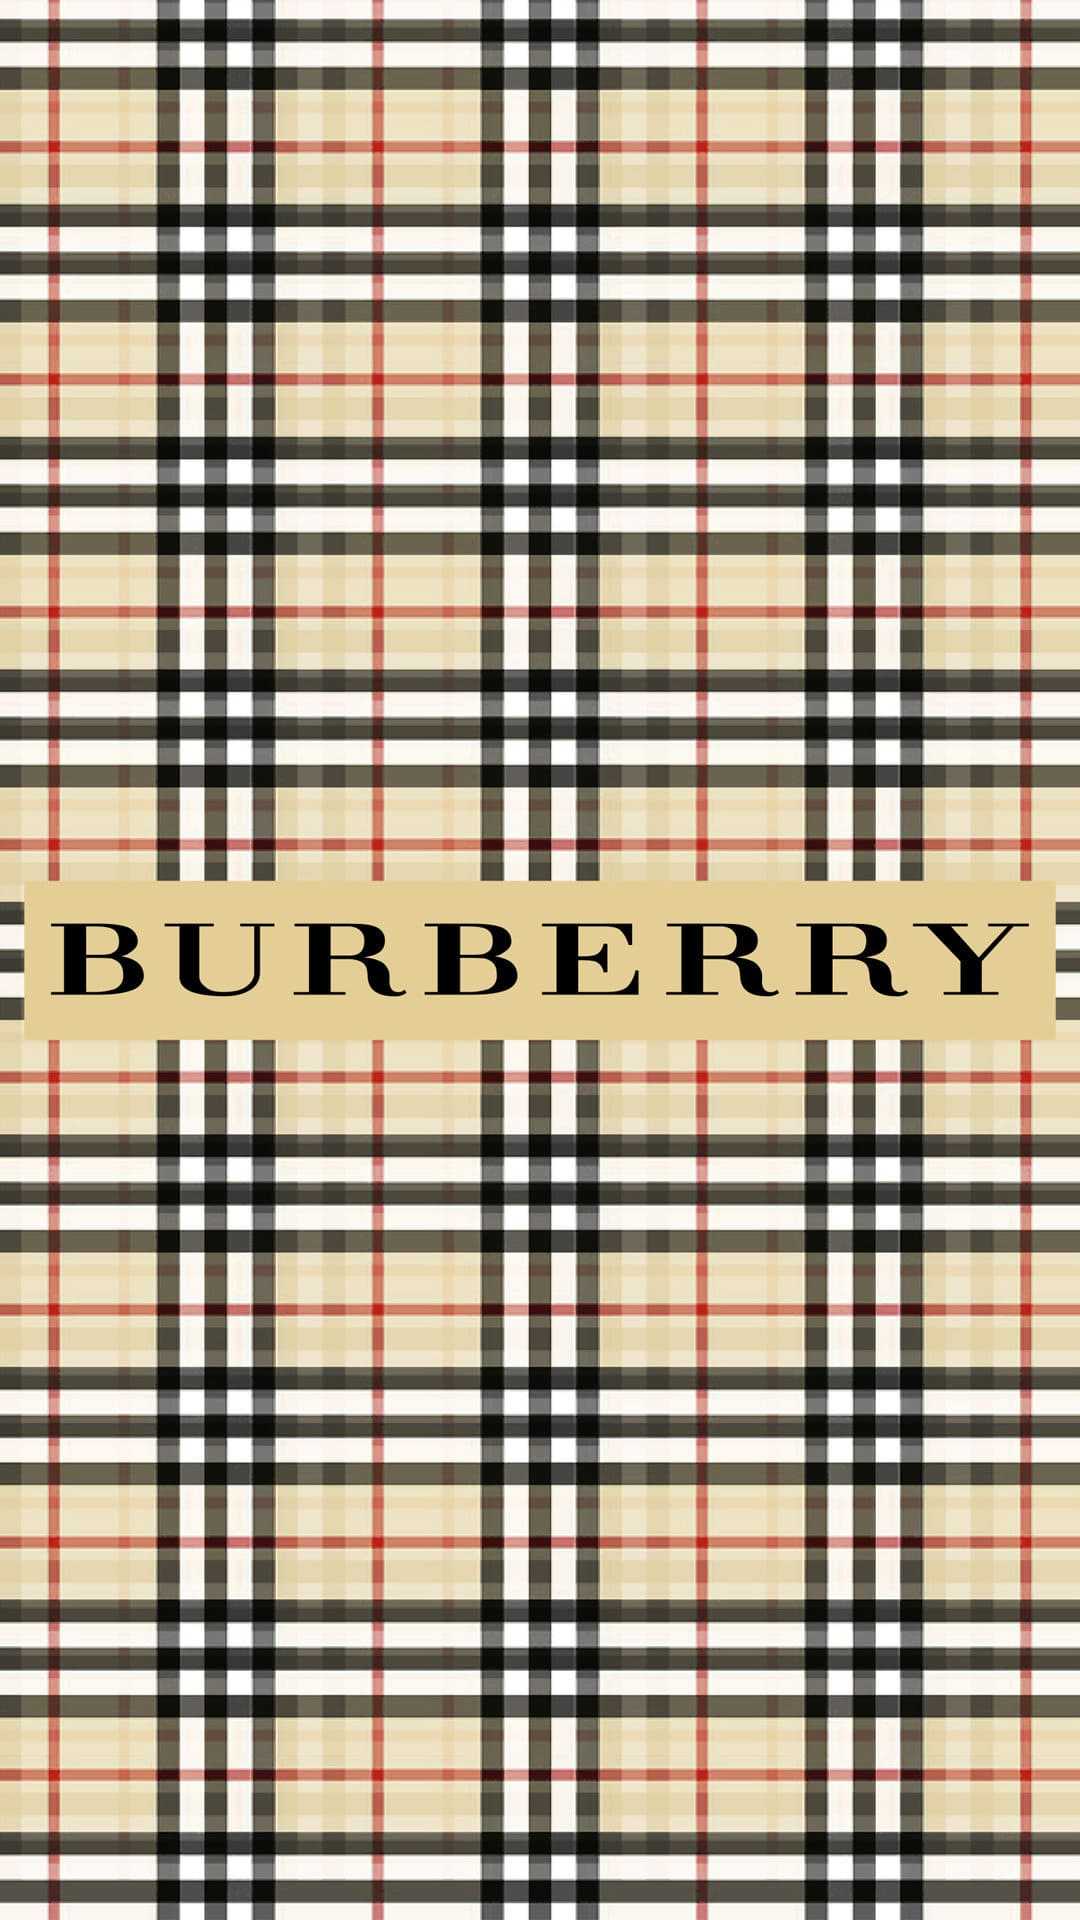 Burberry Wallpaper NawPic